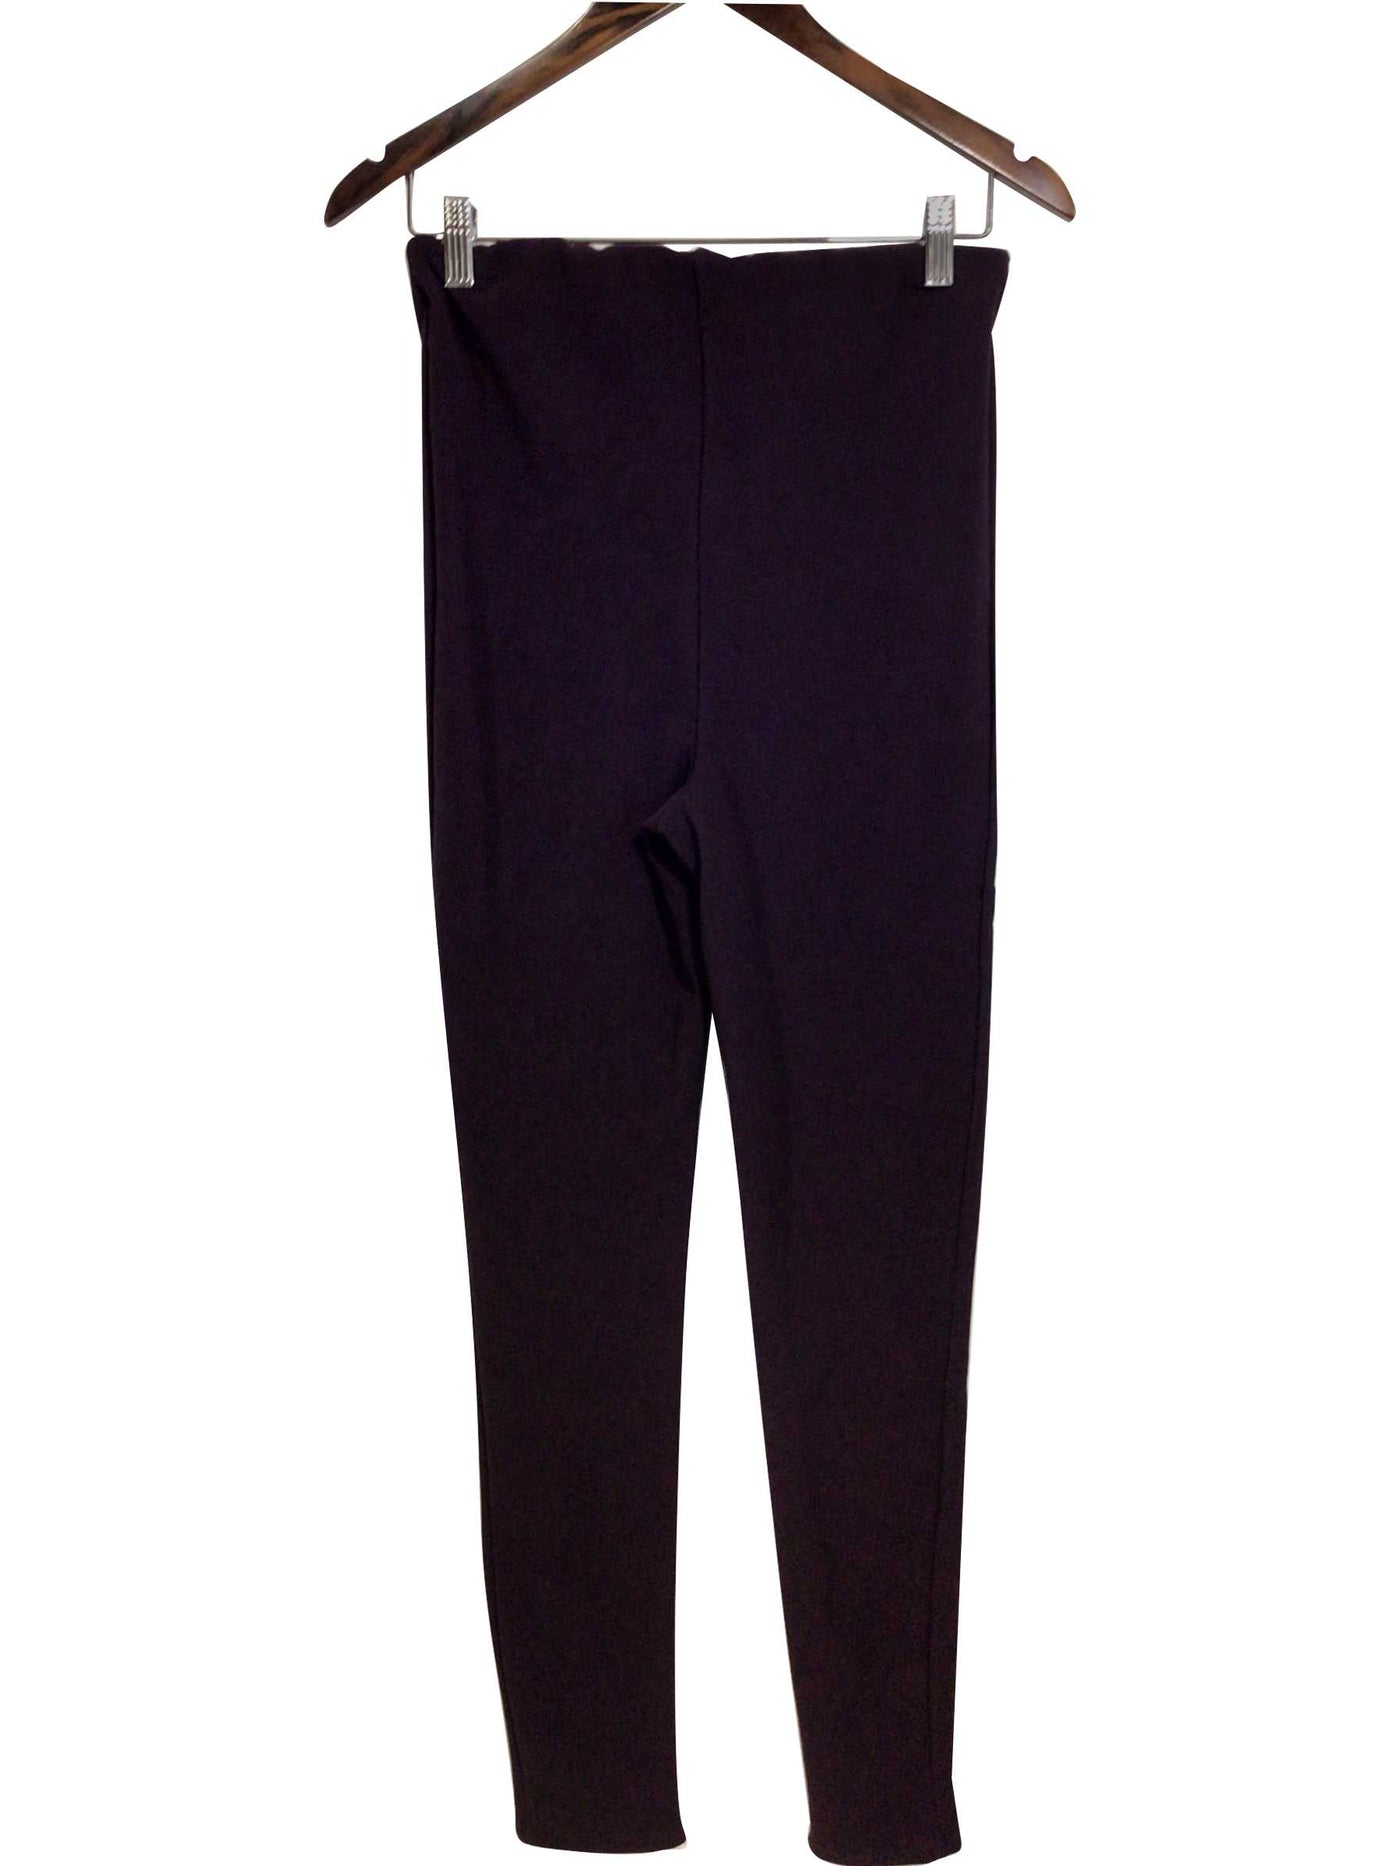 STREETWEAR SOCIETY Regular fit Pant in Purple - Size M | 9.99 $ KOOP